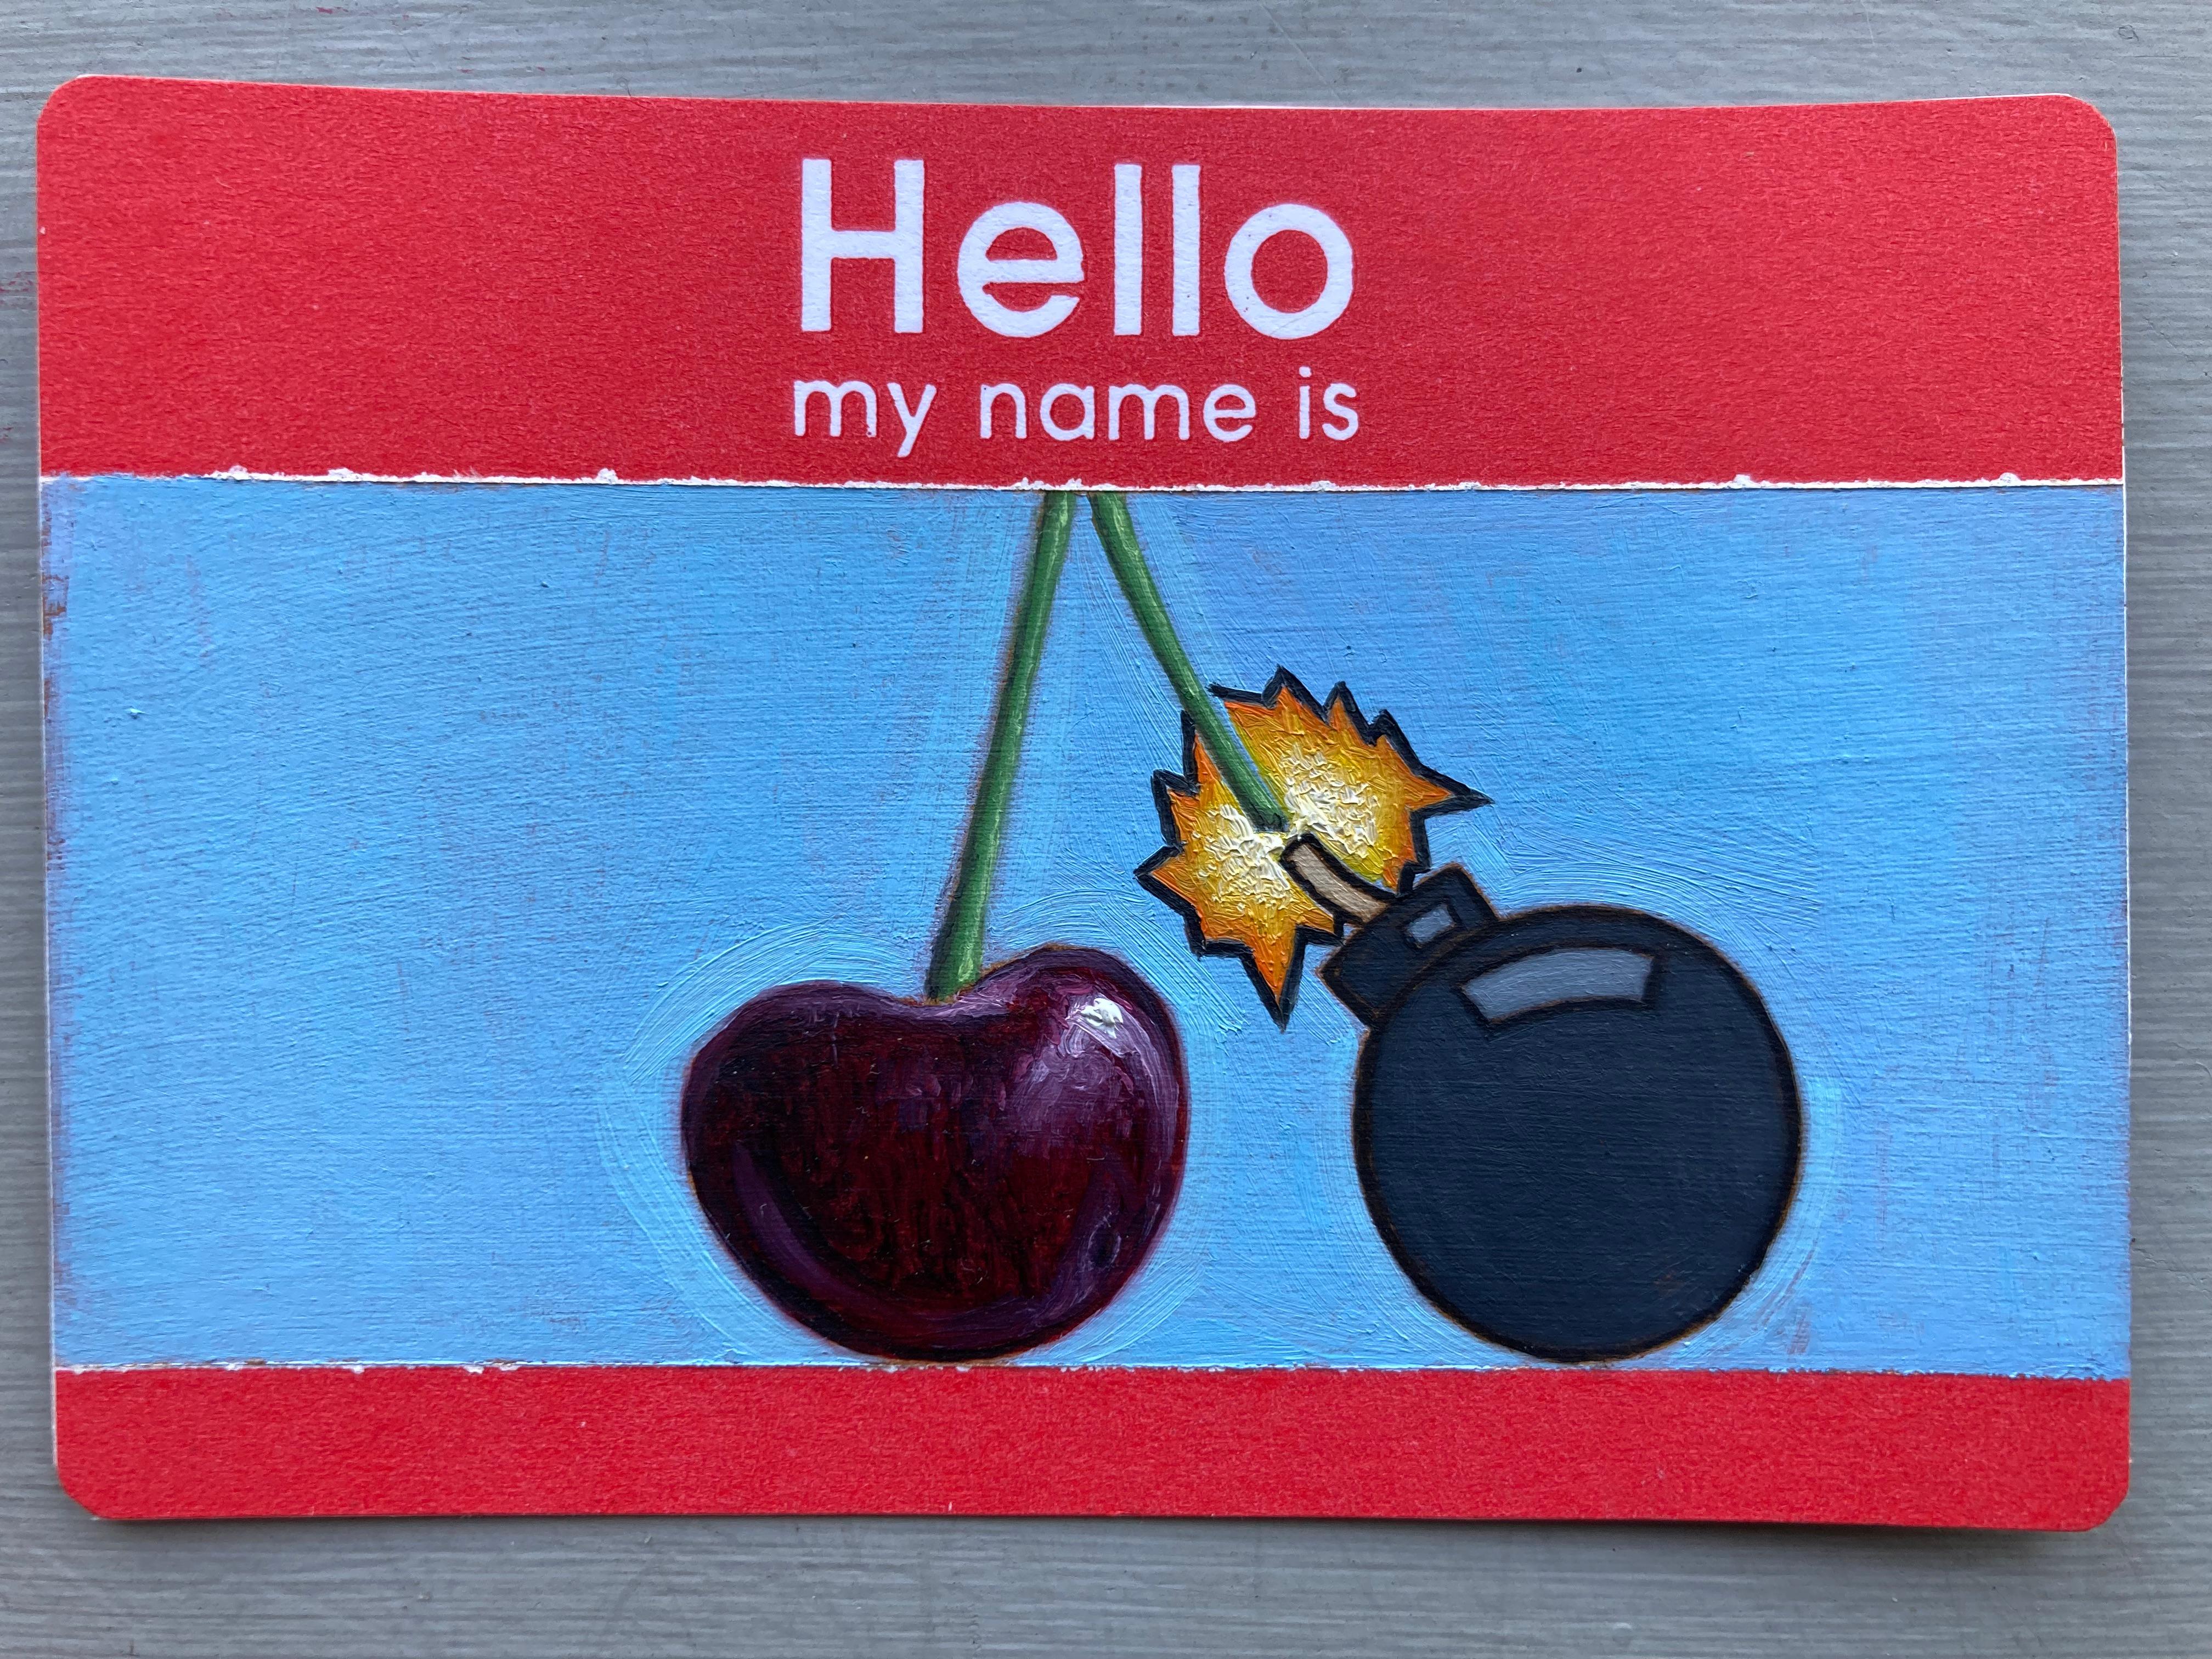 Hello, My Name Is: Cherry Bomb - Miniatur-Piktogramm auf Papier (Fotorealismus), Mixed Media Art, von Anthony Mastromatteo